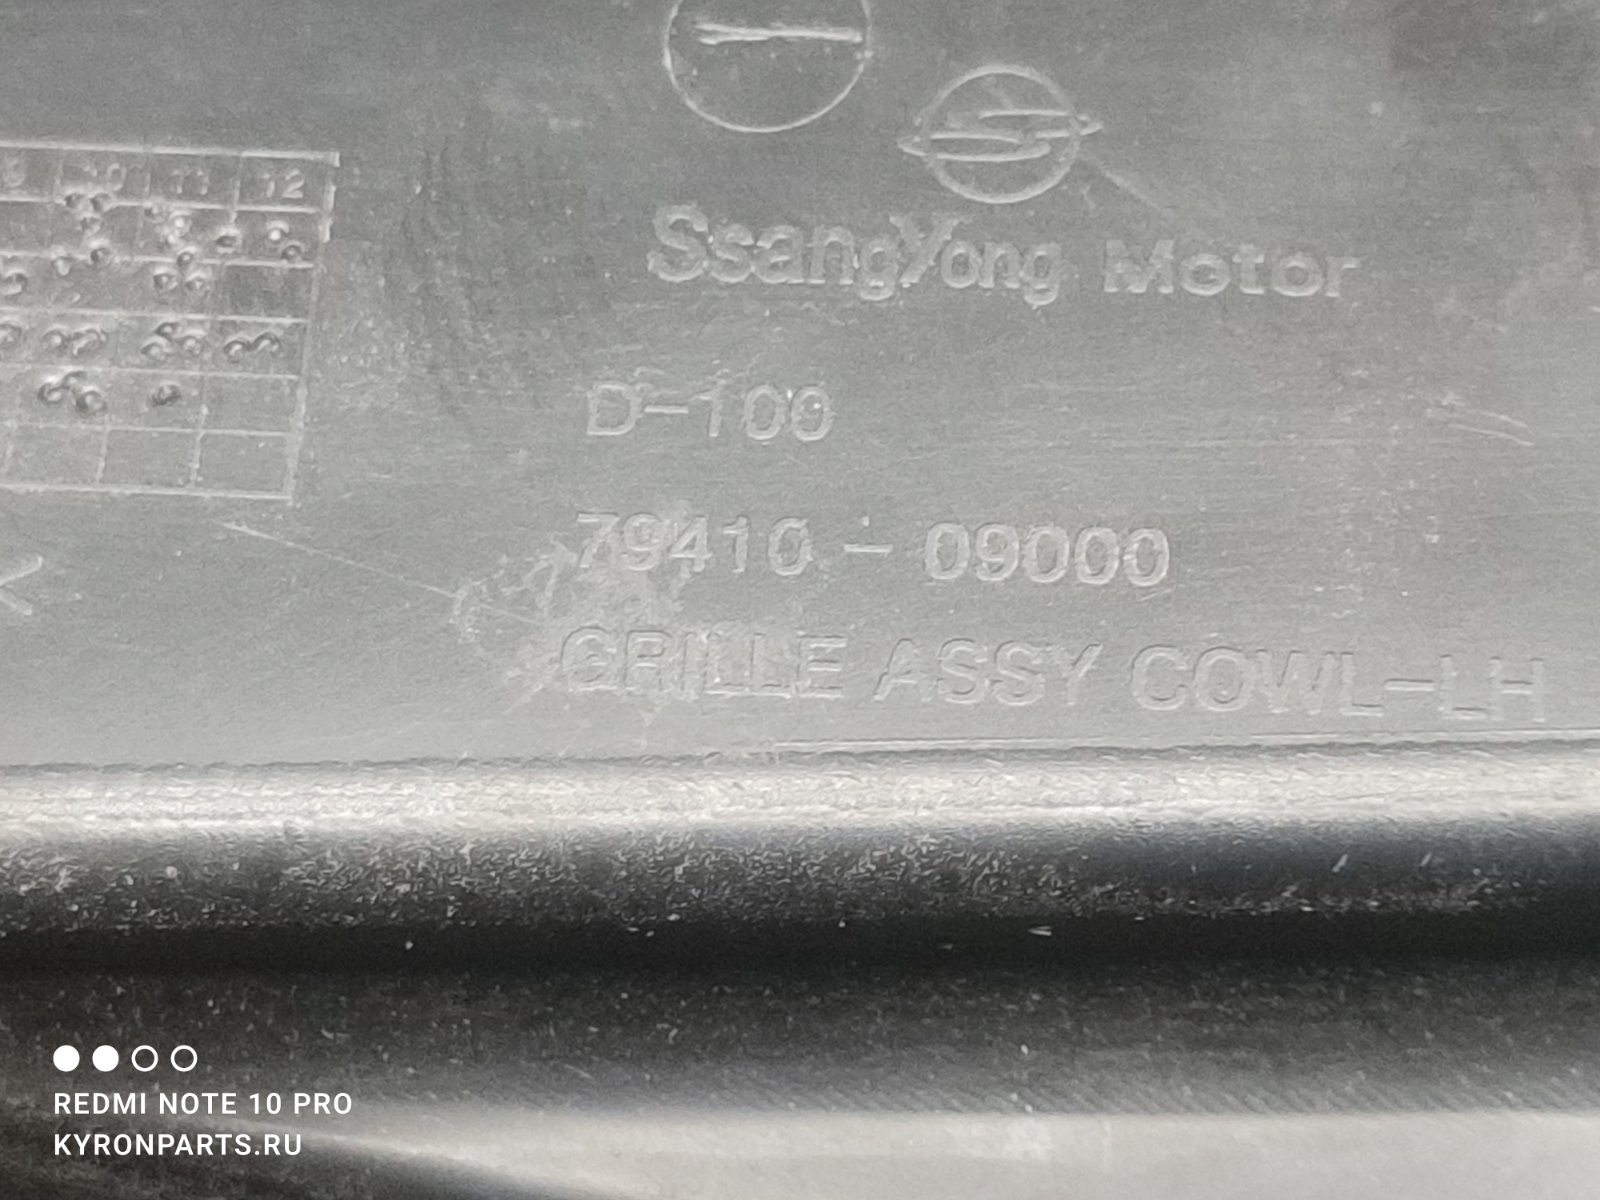 Решетка воздухозаборника (жабо) левая SsangYong Kyron D130 D20DT